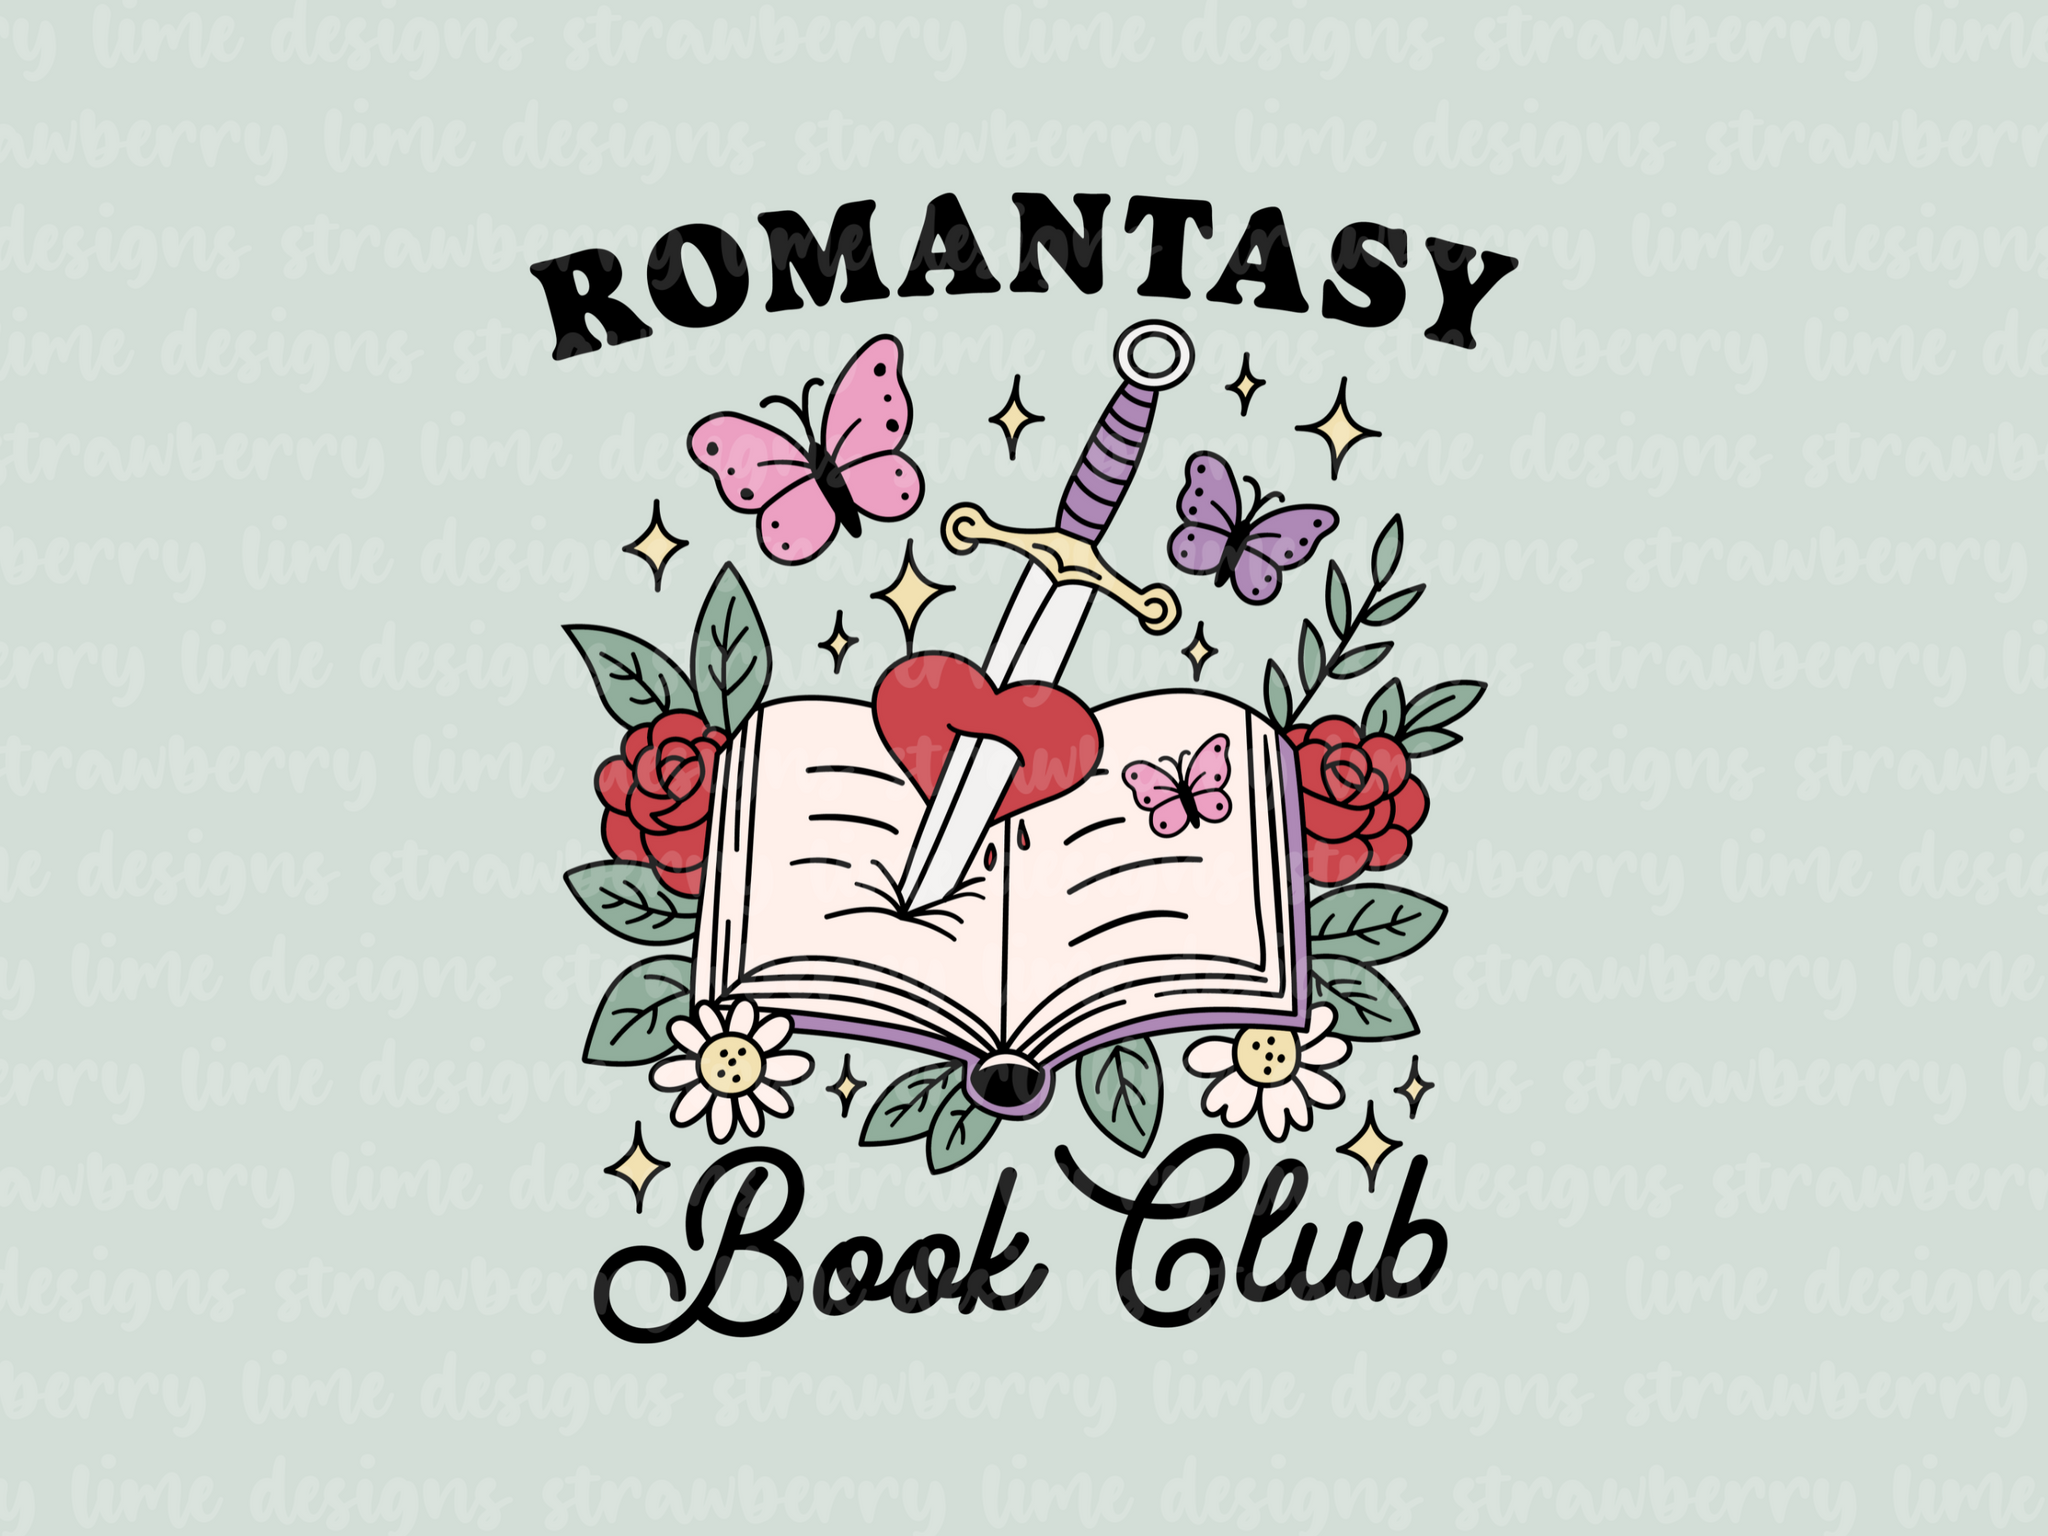 Romantasy Book Club Die Cut Sticker